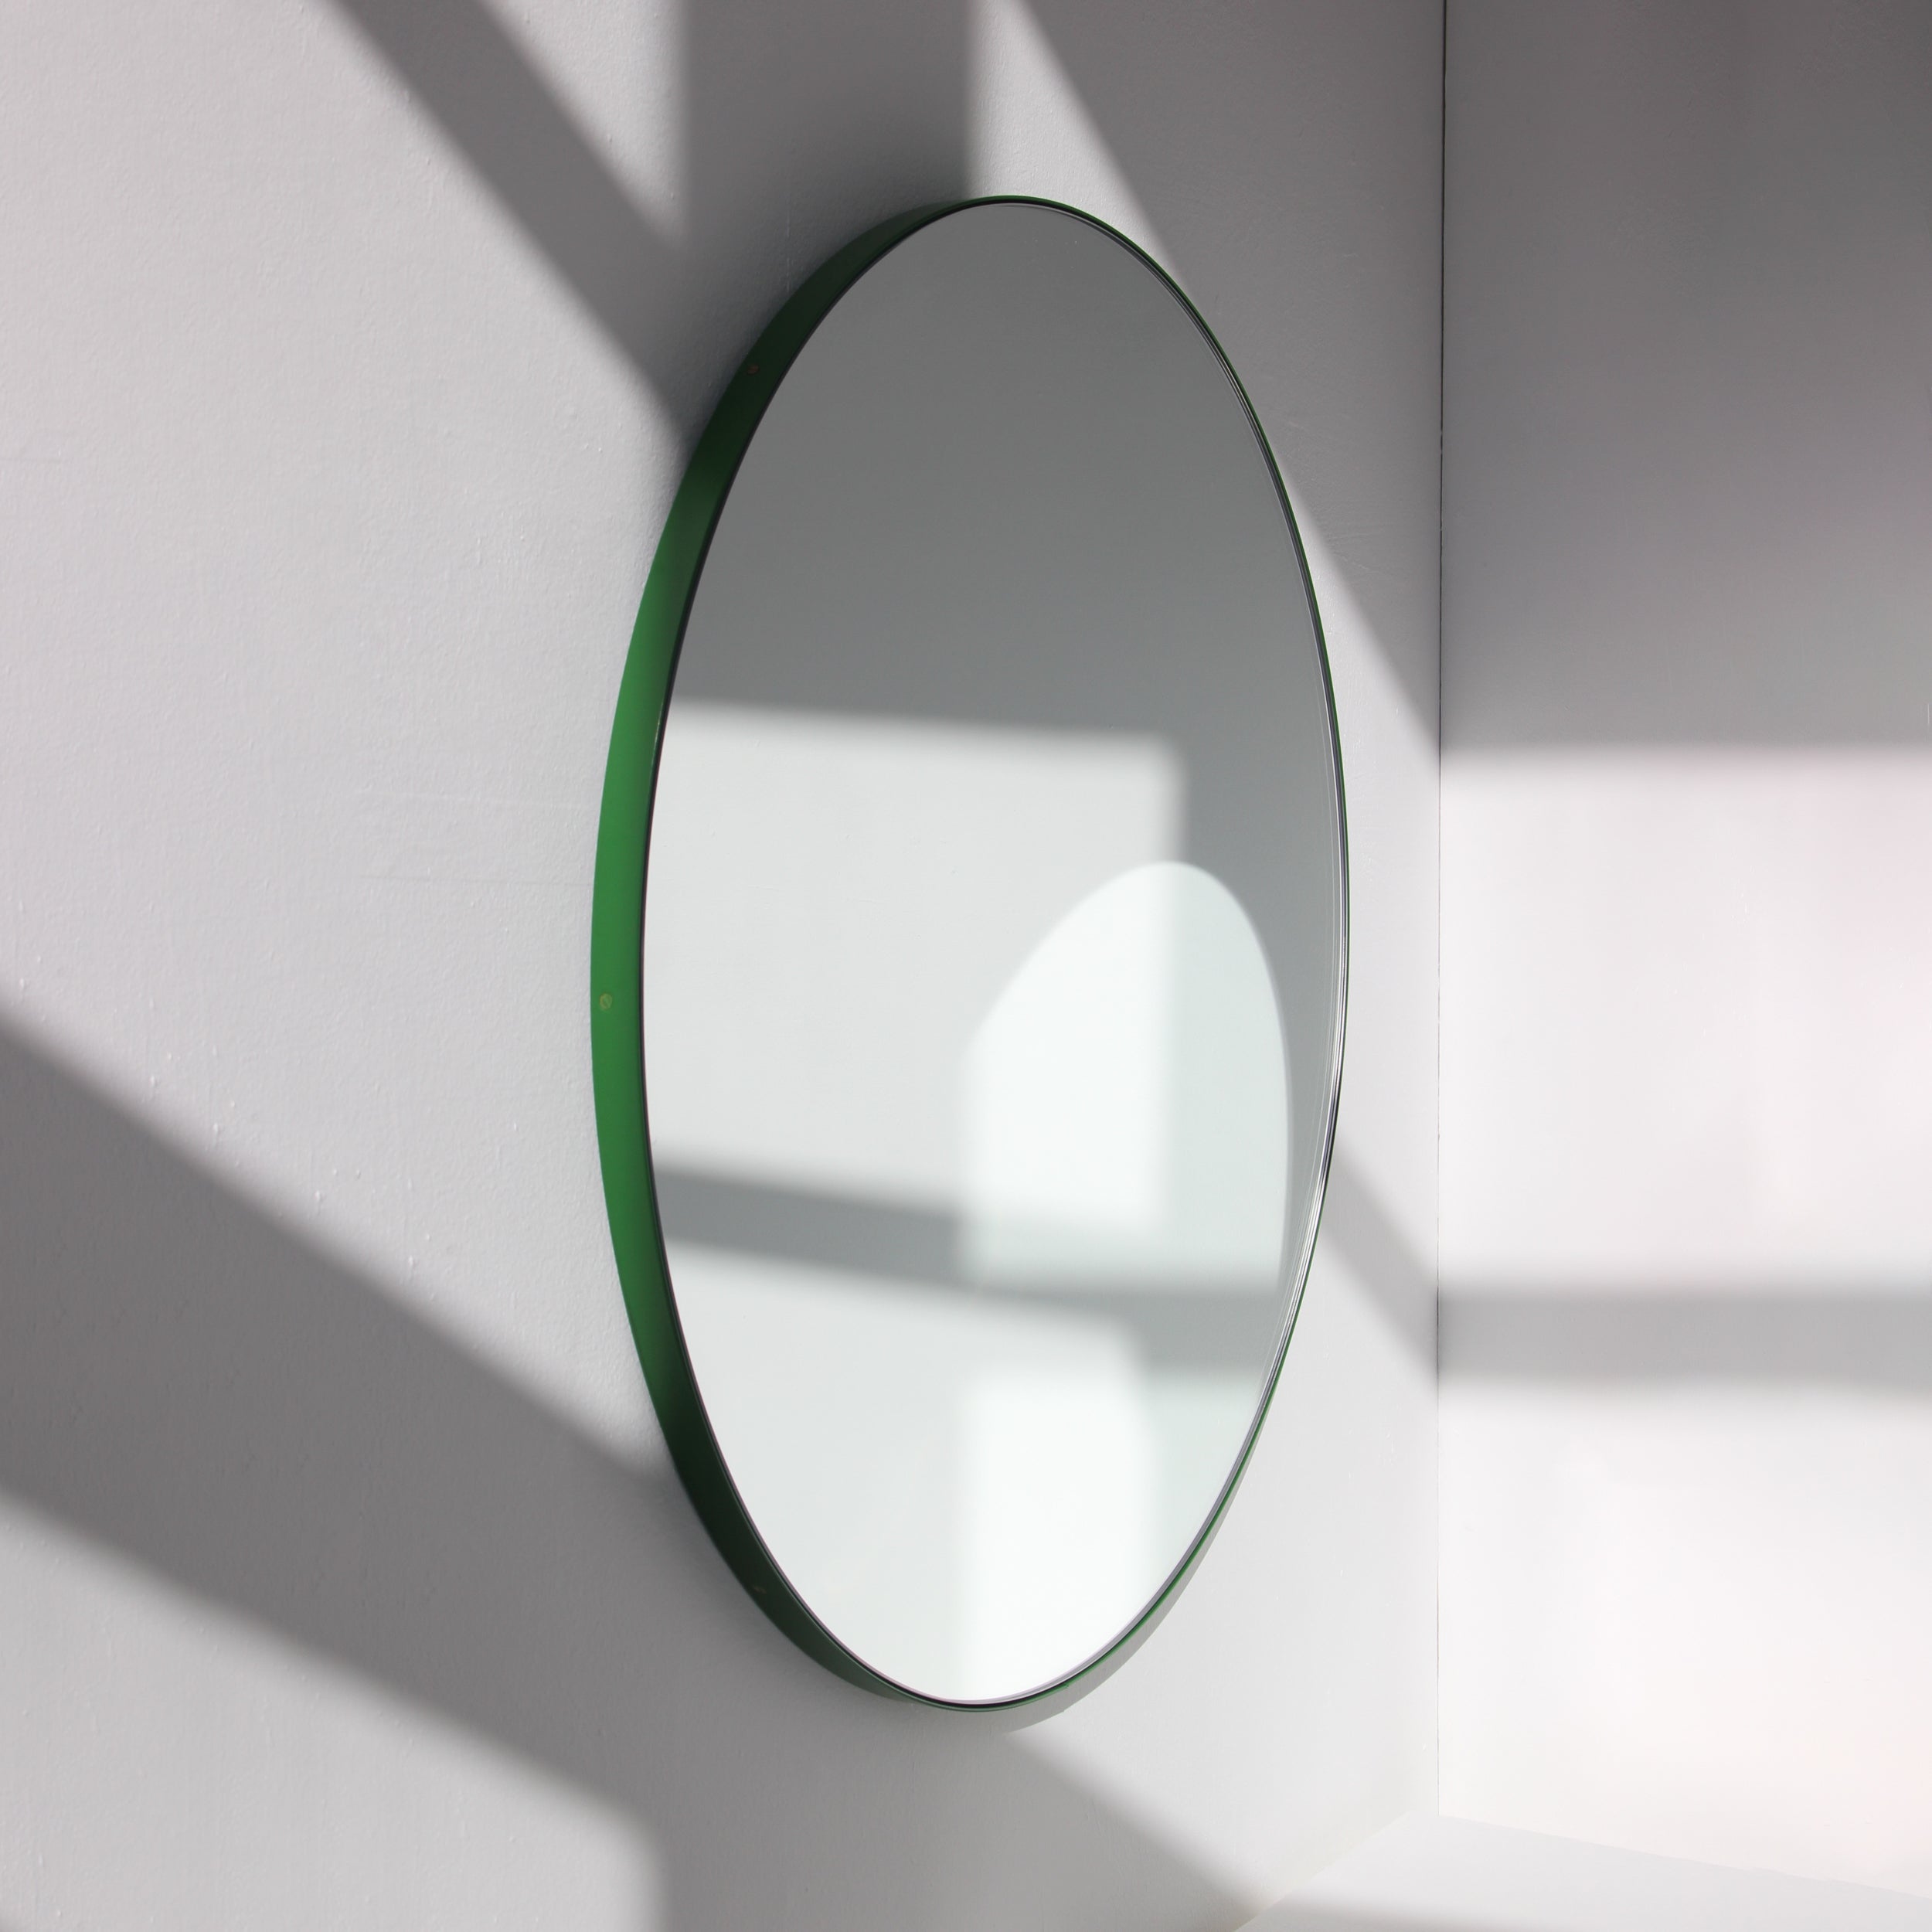 Orbis Round Minimalist Mirror with Green Frame, Small